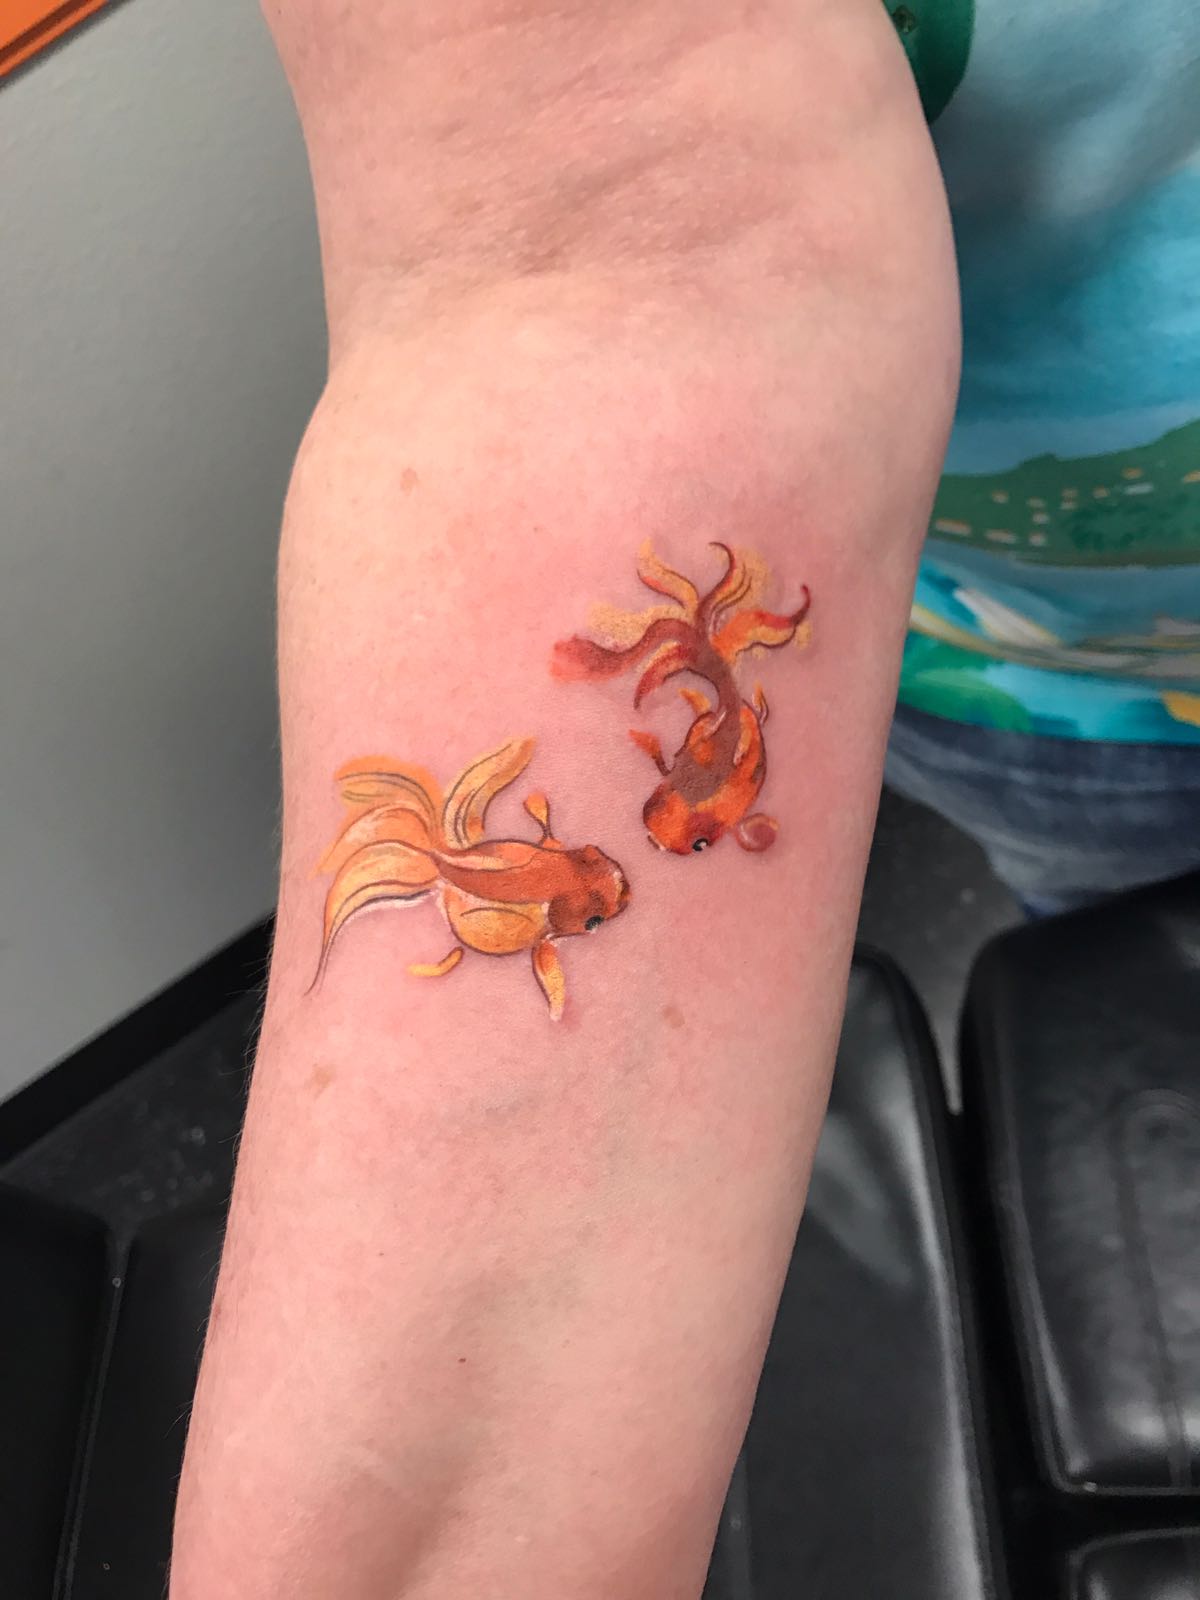 goldfish tattoo by theblackdragon on DeviantArt